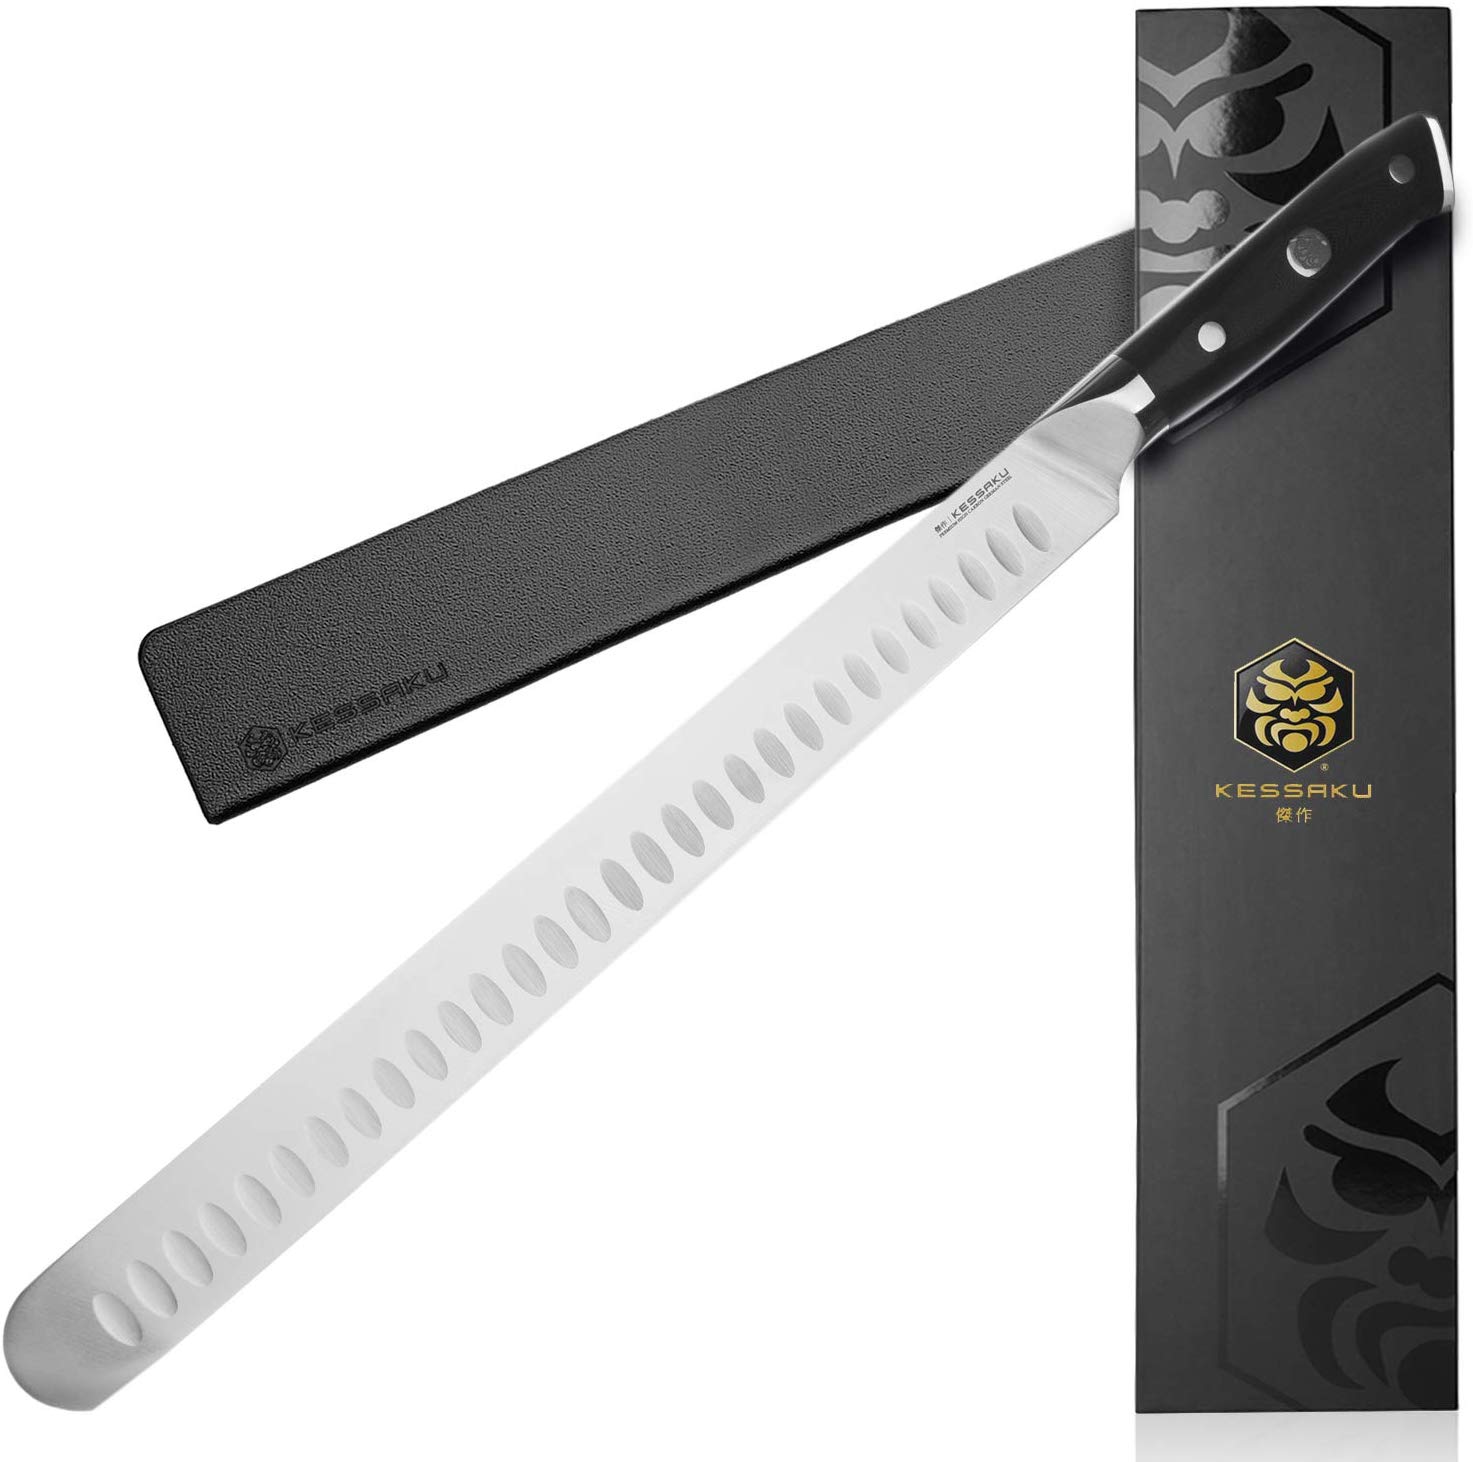 Kessaku Dynasty Series Slicing Knife